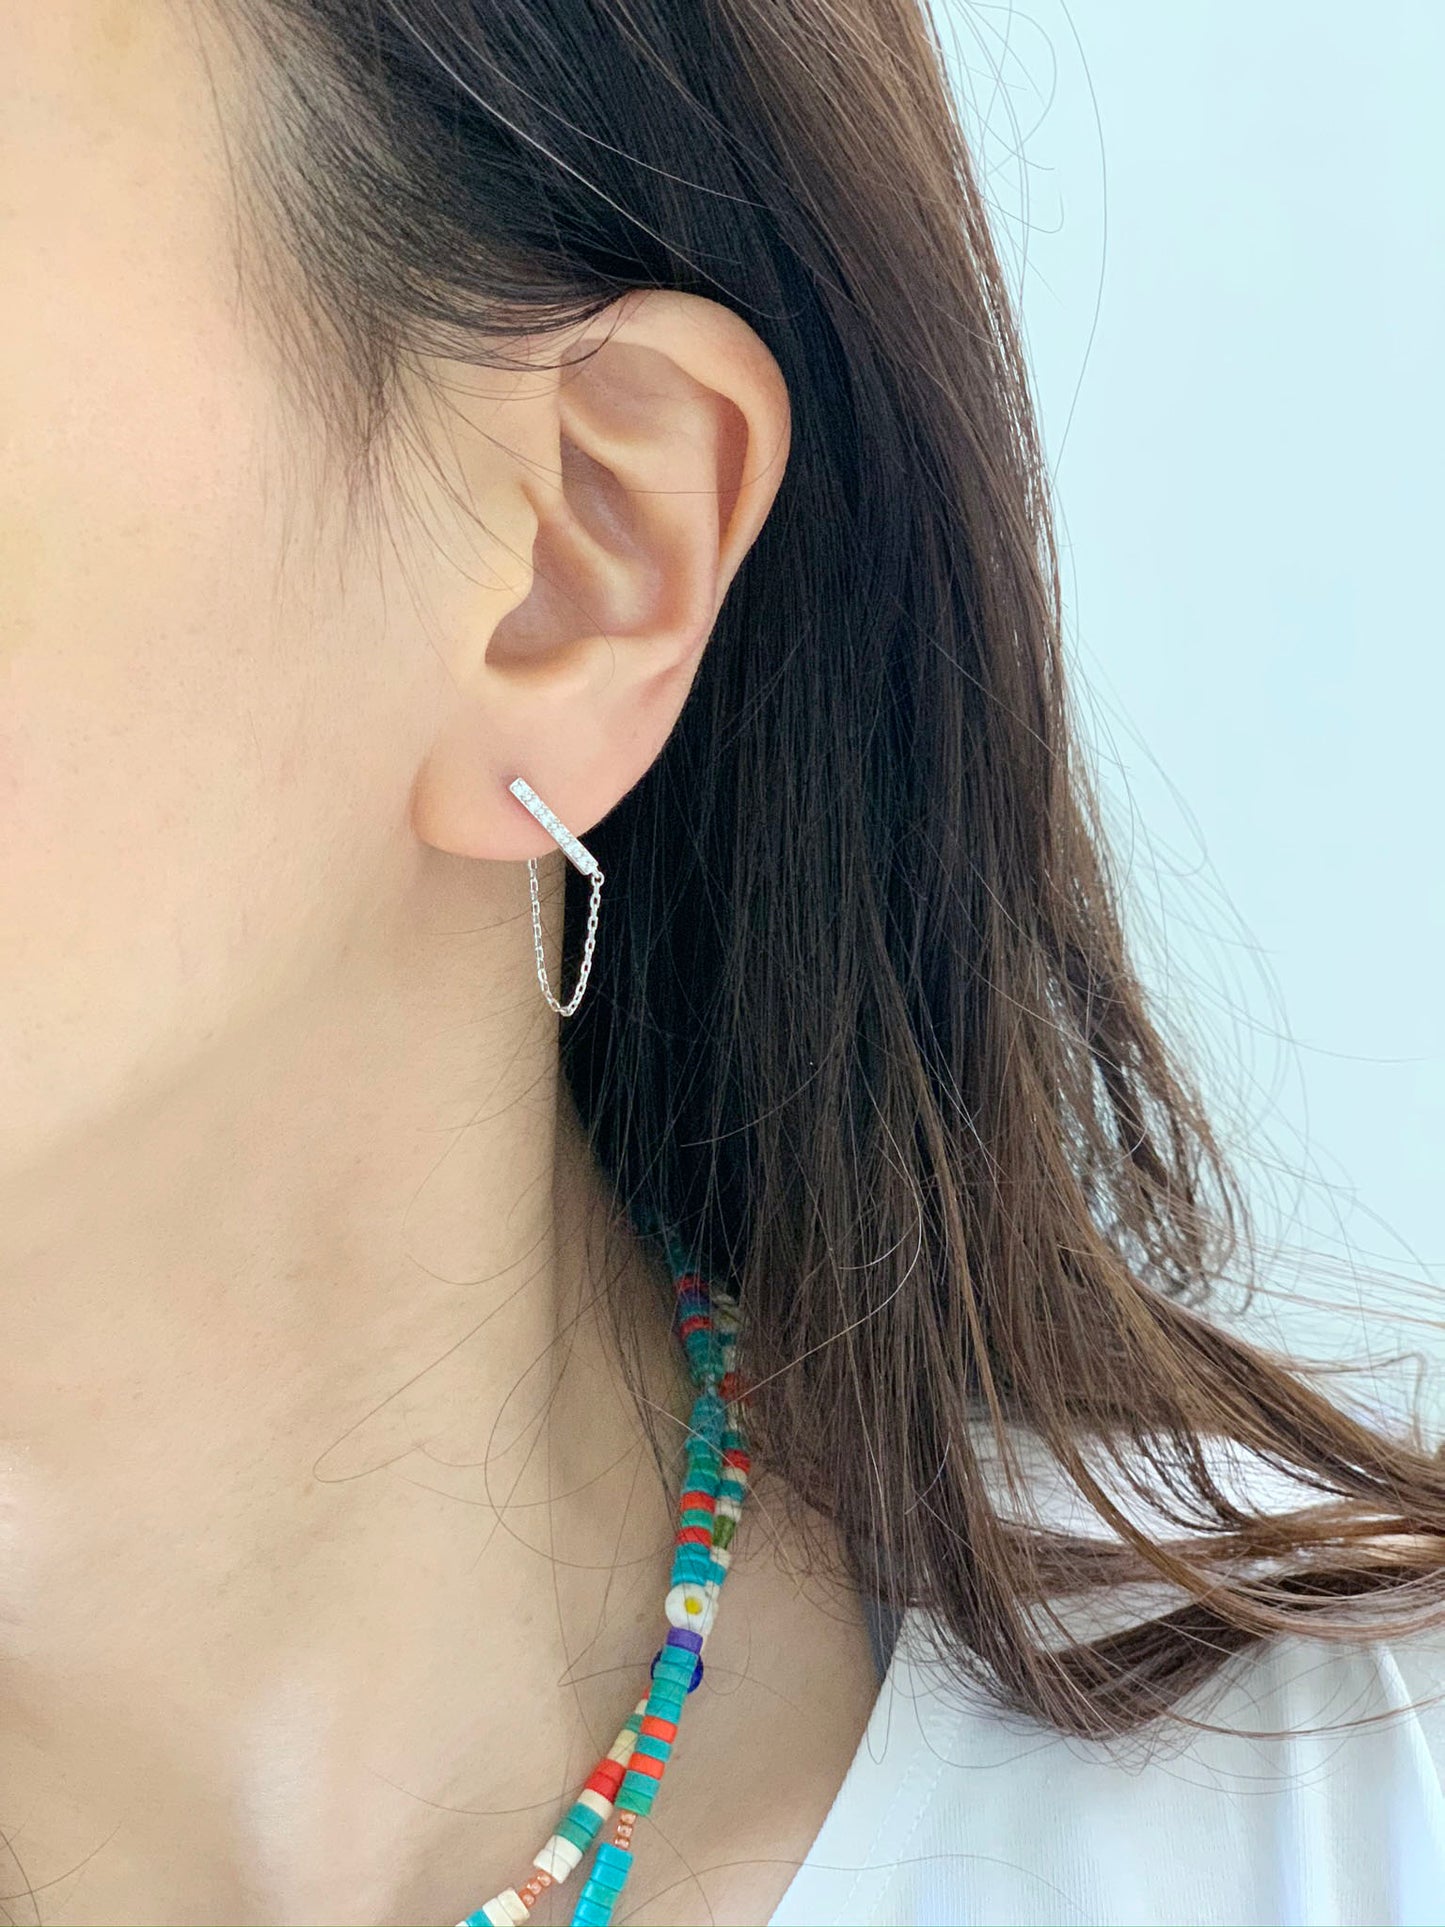 Crystals bar drop earrings, cubic chain drop Earrings, bar and chain earrings, squae cubic bar drop earrings-2 Types